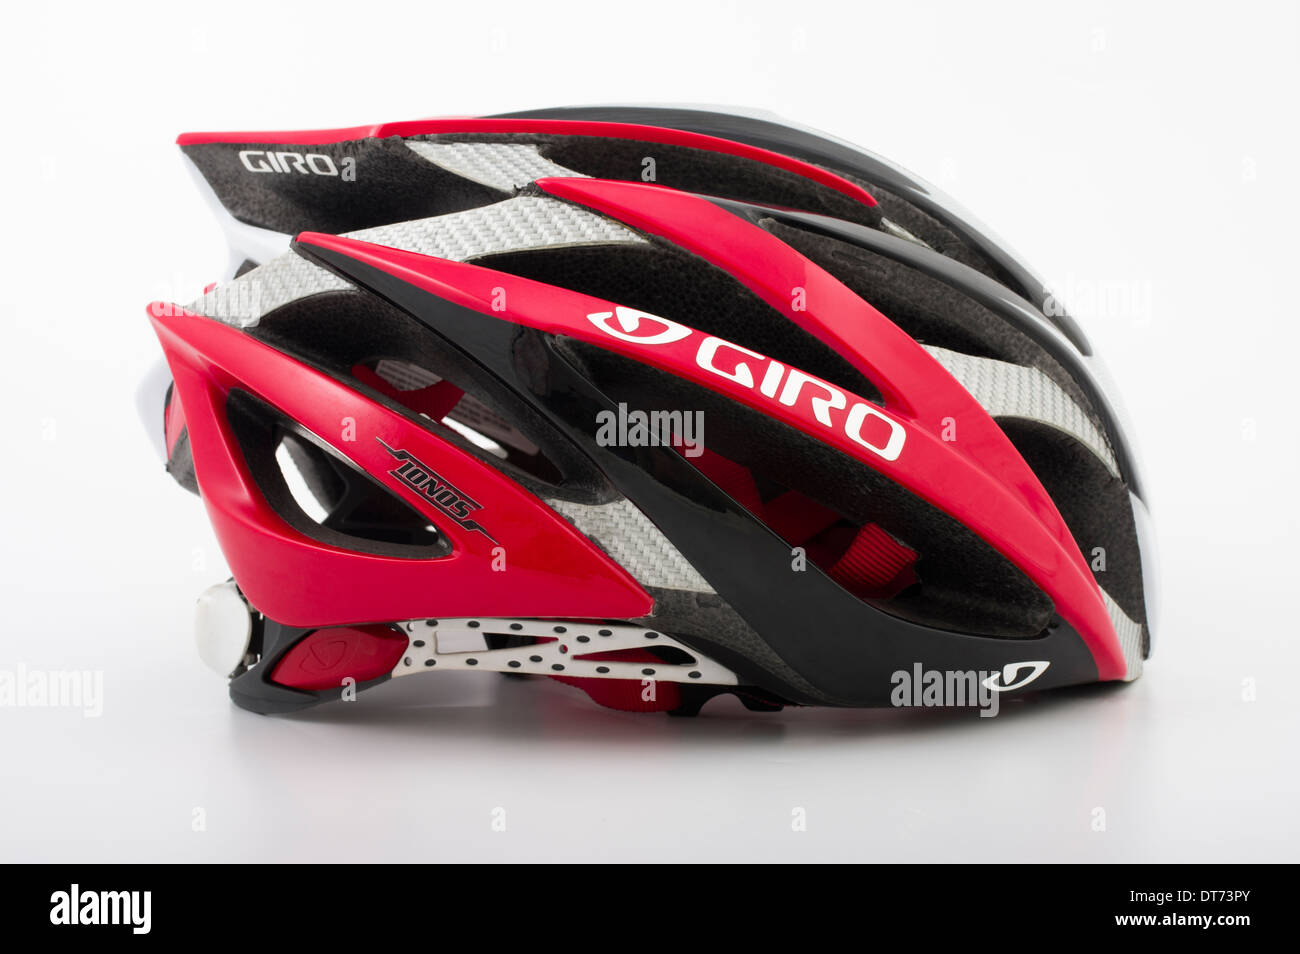 Giro Ionos leggero da corsa su strada ciclismo / triathlon casco Foto stock  - Alamy